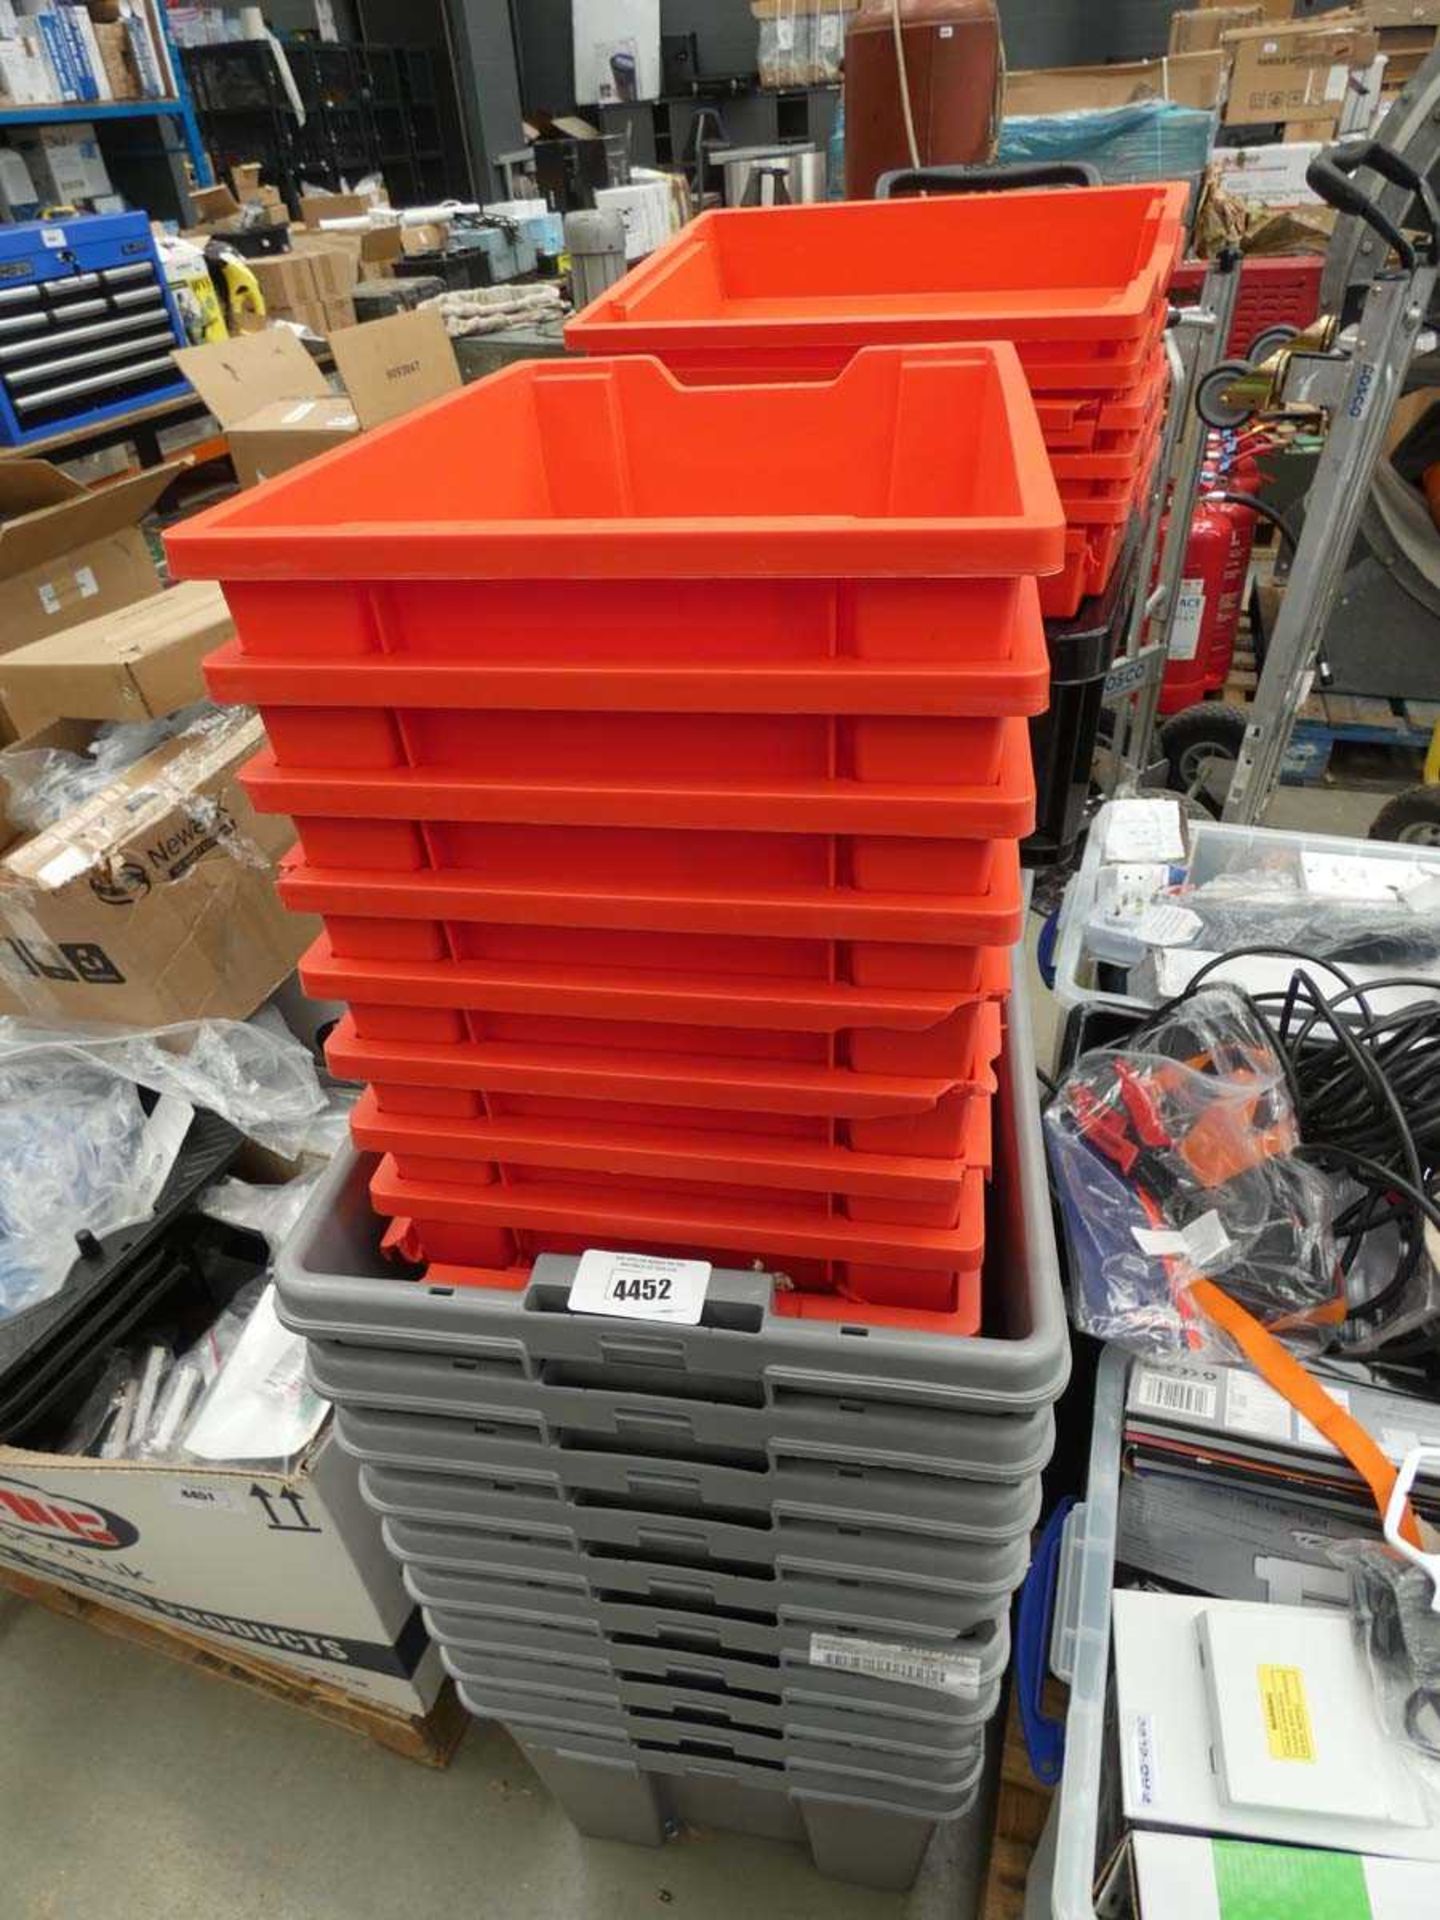 +VAT Quantity of grey and red plastic crates